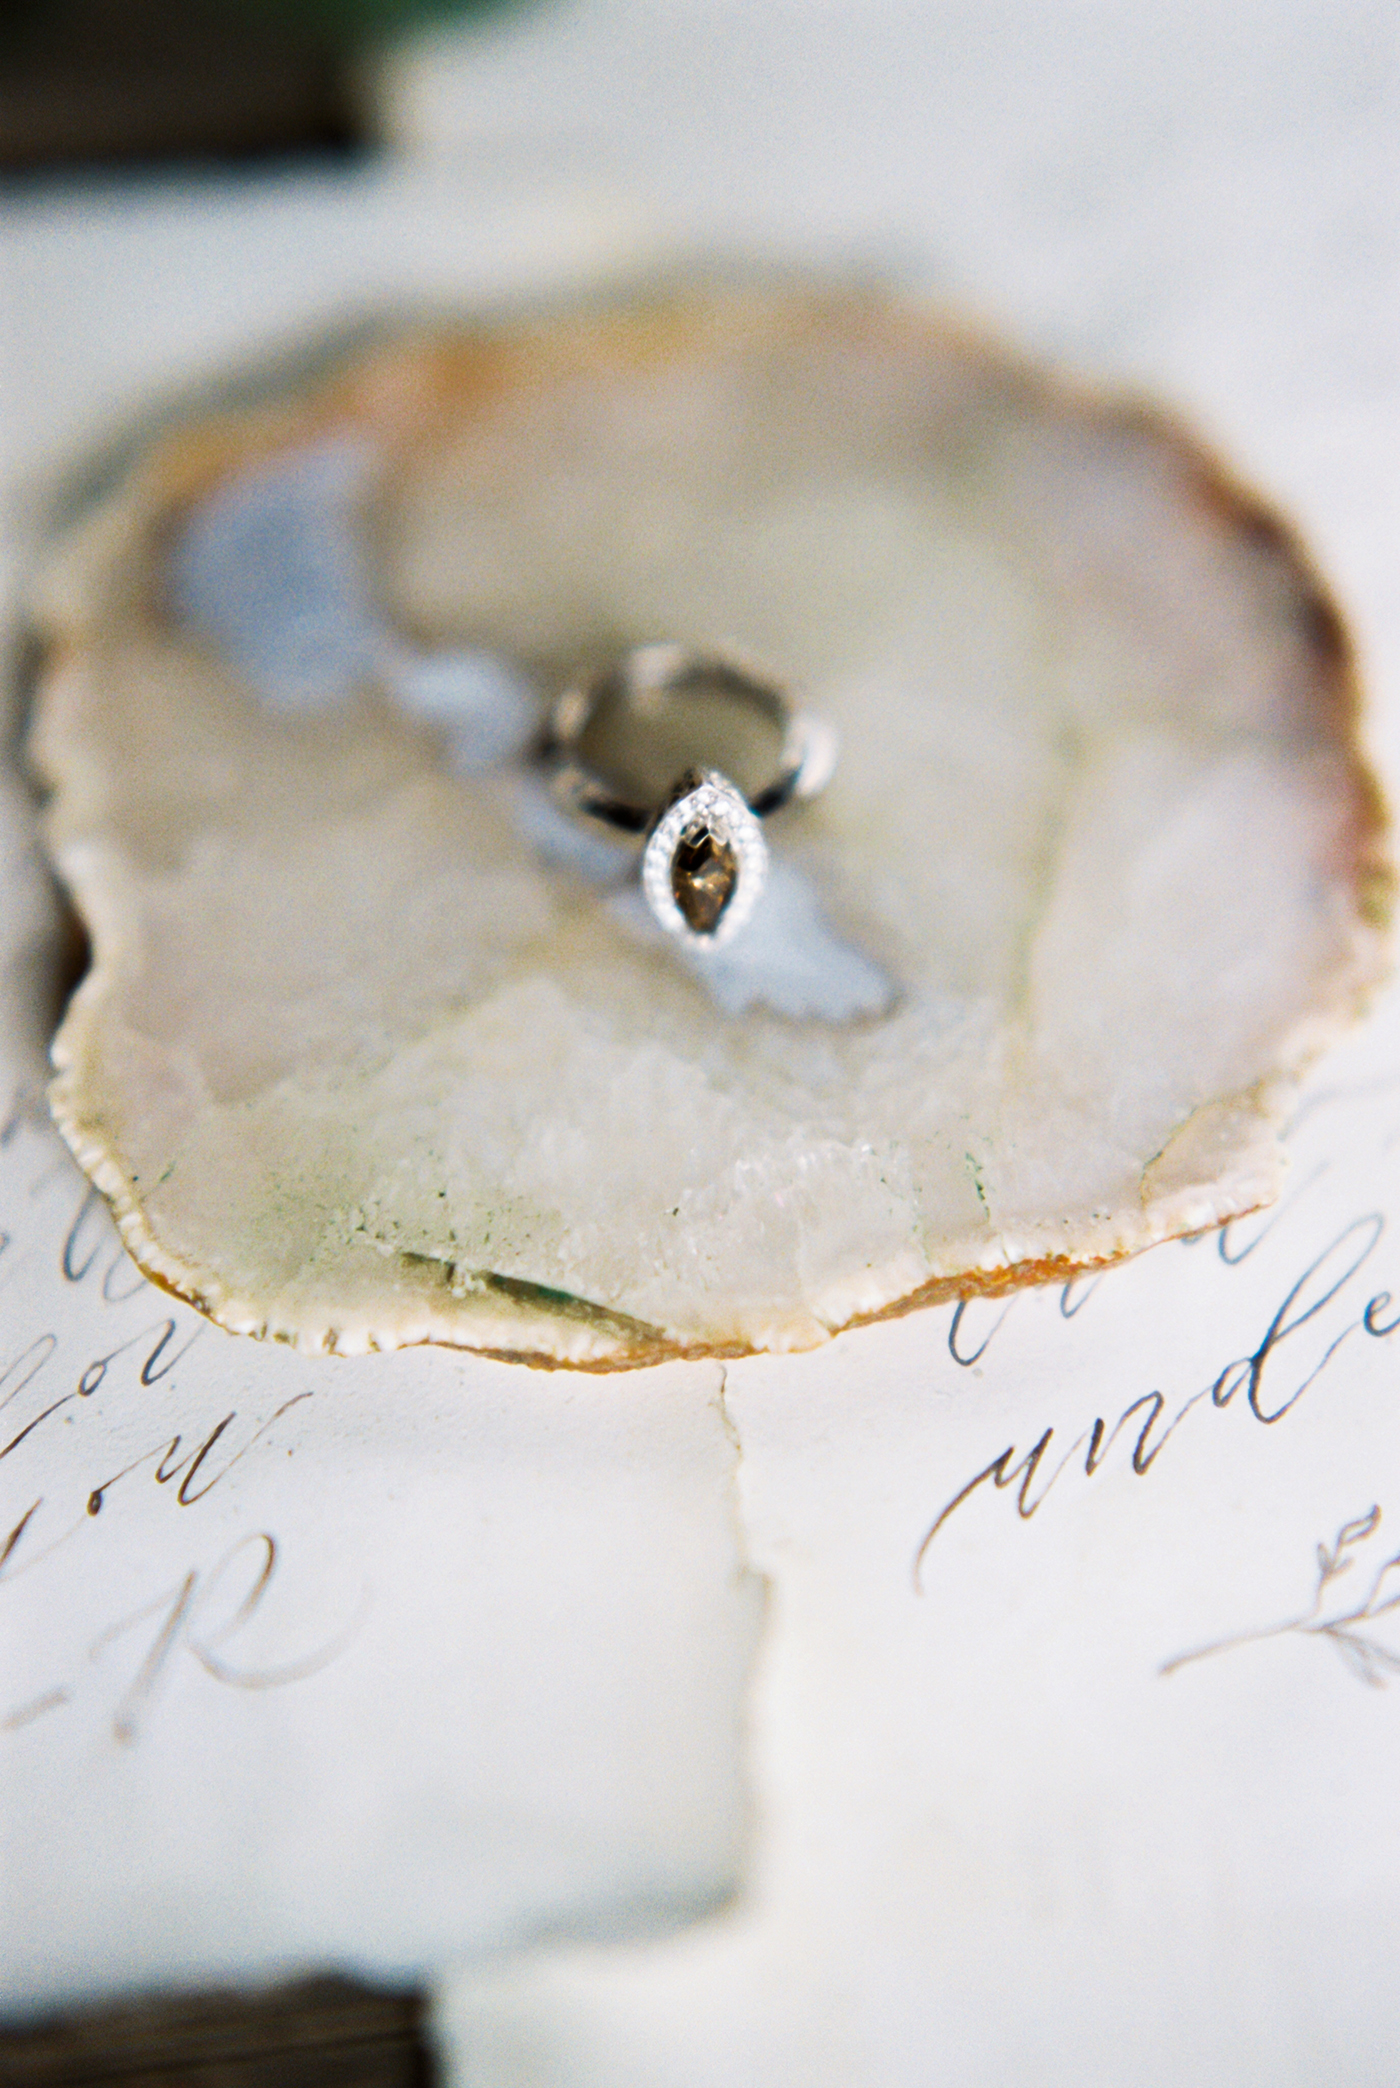 Sarah Ann Design - Fine Art Wedding Stationery - Old World Bridal Inspiration 